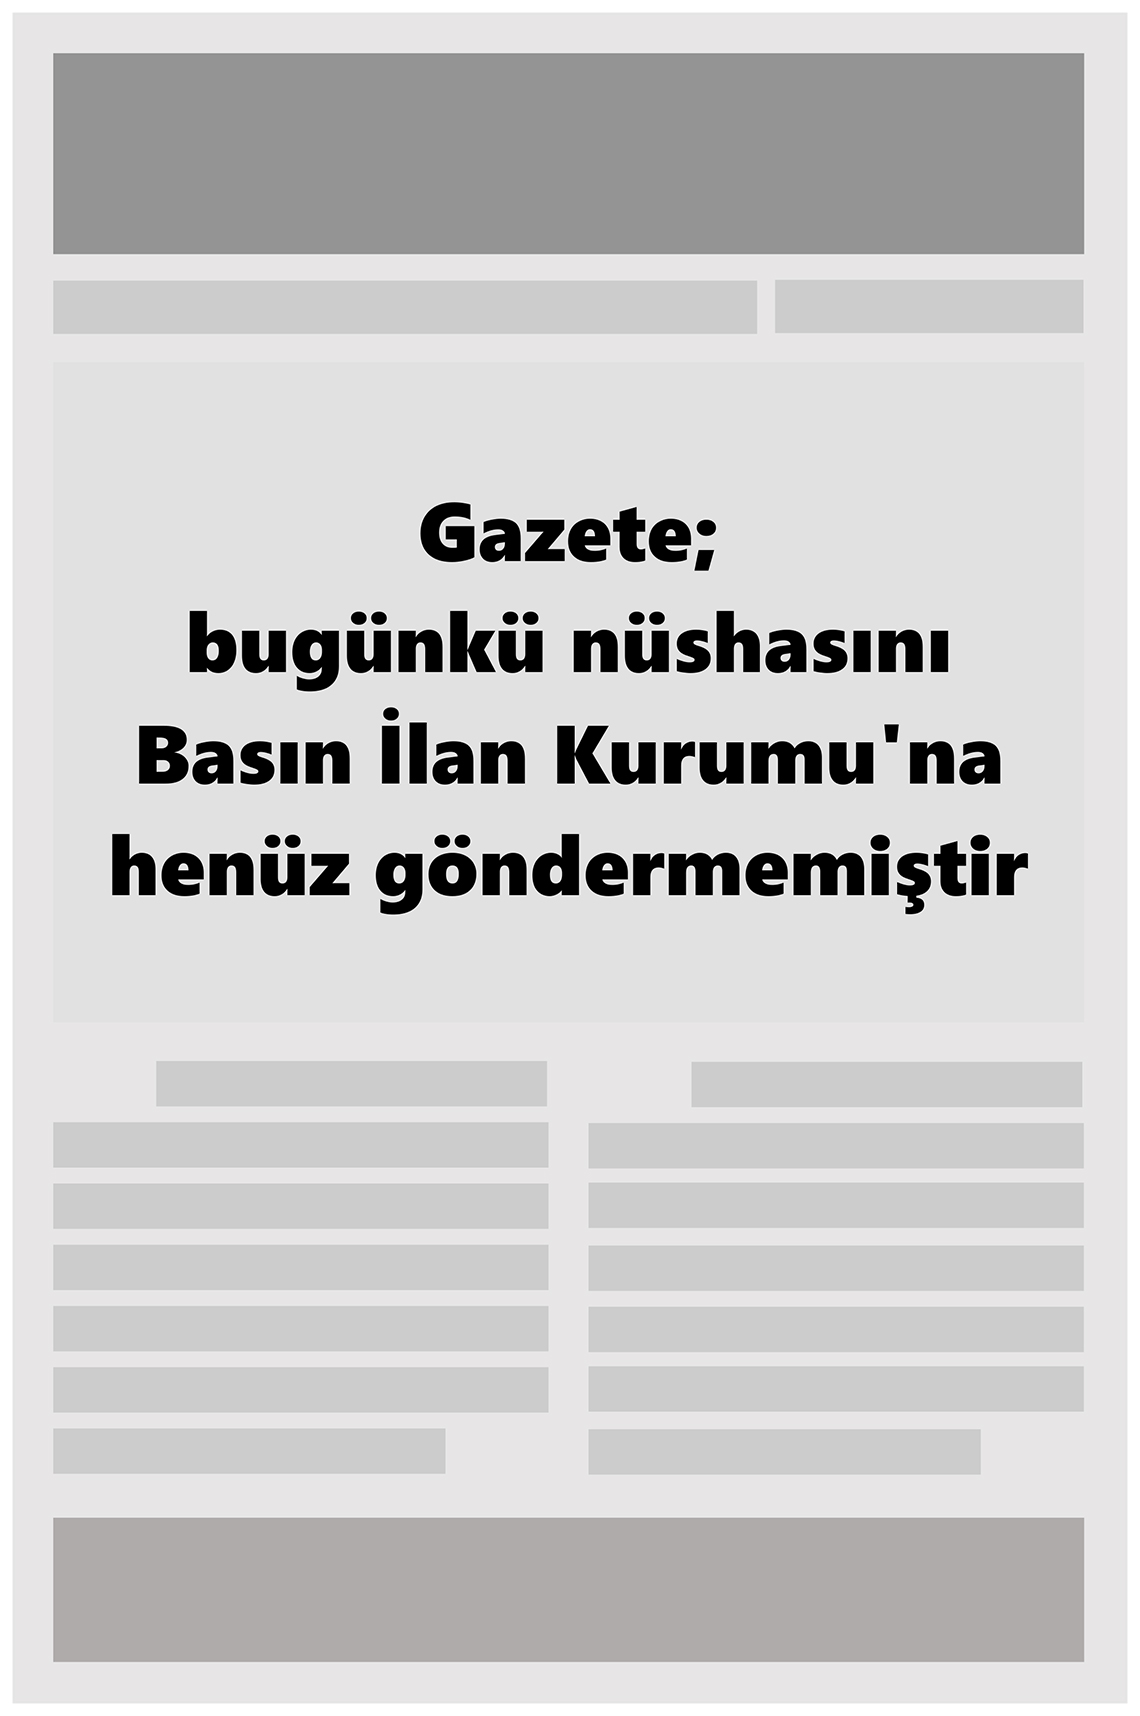 MİLLİ GAZETE Gazetesi